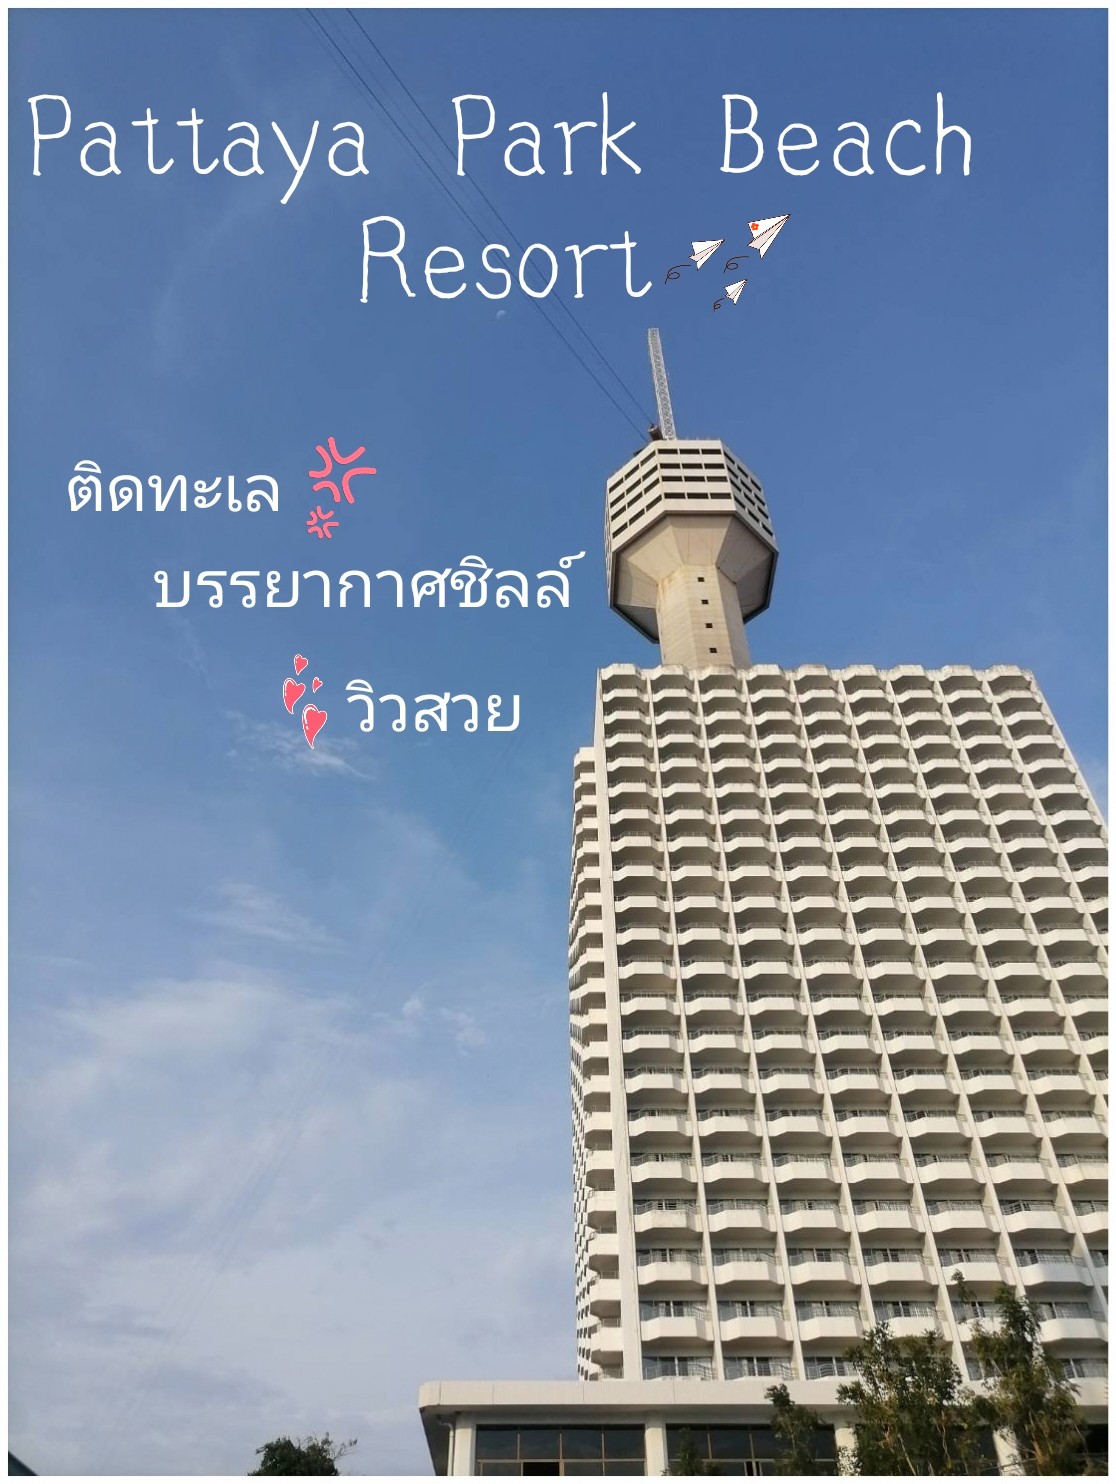 Pattaya Park Beach Resort" 🏢 ที่พักติดทะเล ⛱️ บรรยากาศชิลล์ วิวส๊วยสวย  ☘️⛅💛💋⭐💥👍 - Pantip